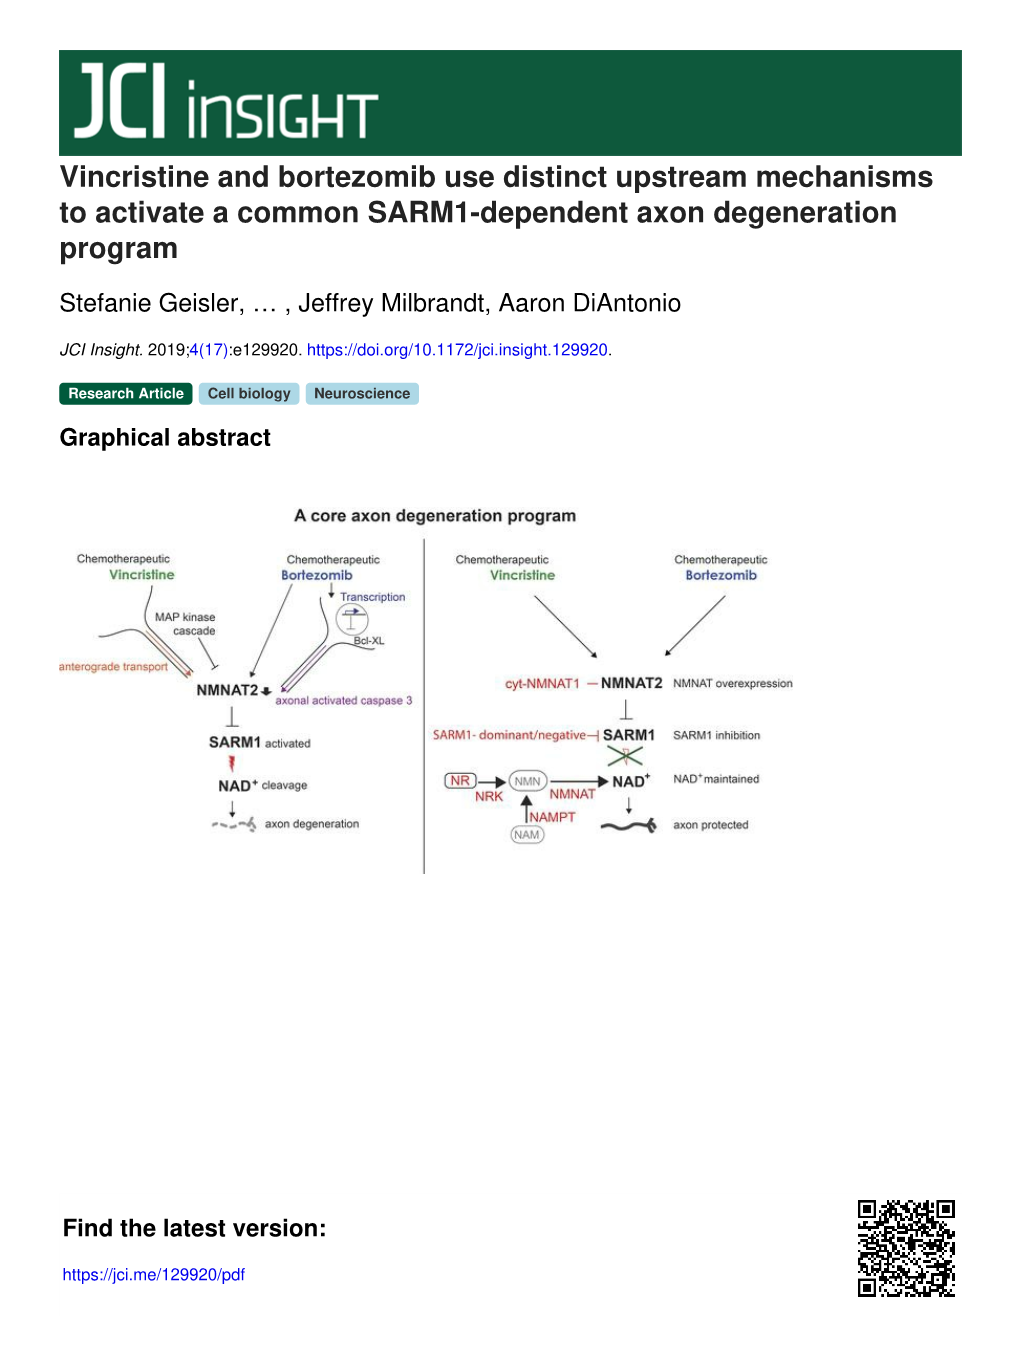 Vincristine and Bortezomib Use Distinct Upstream Mechanisms to Activate a Common SARM1-Dependent Axon Degeneration Program